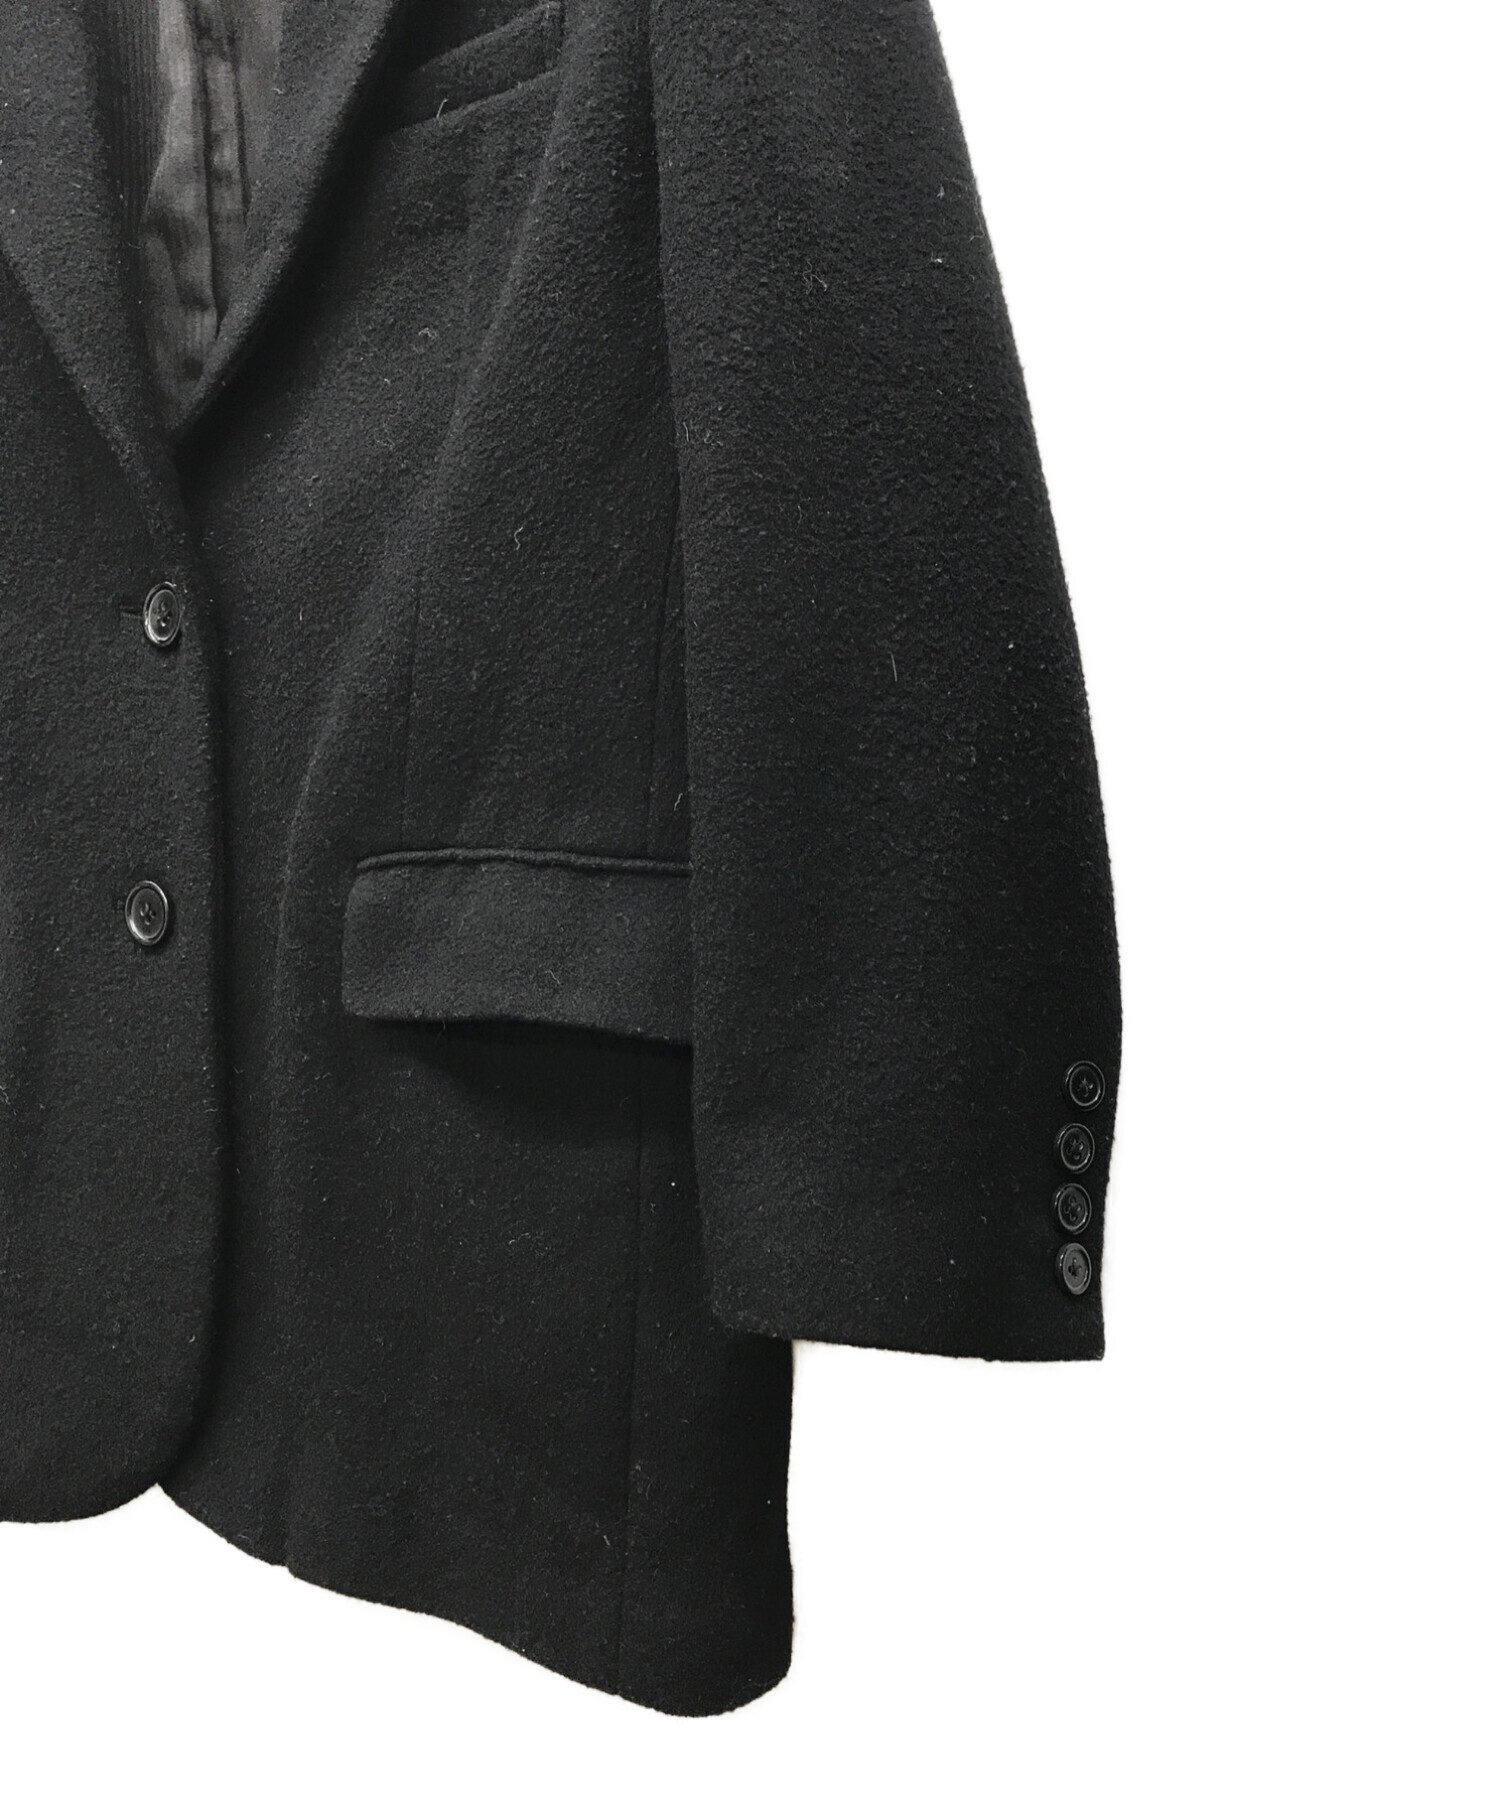 Snidel (スナイデル) オーバーサイズウールジャケットコート ブラック サイズ:F